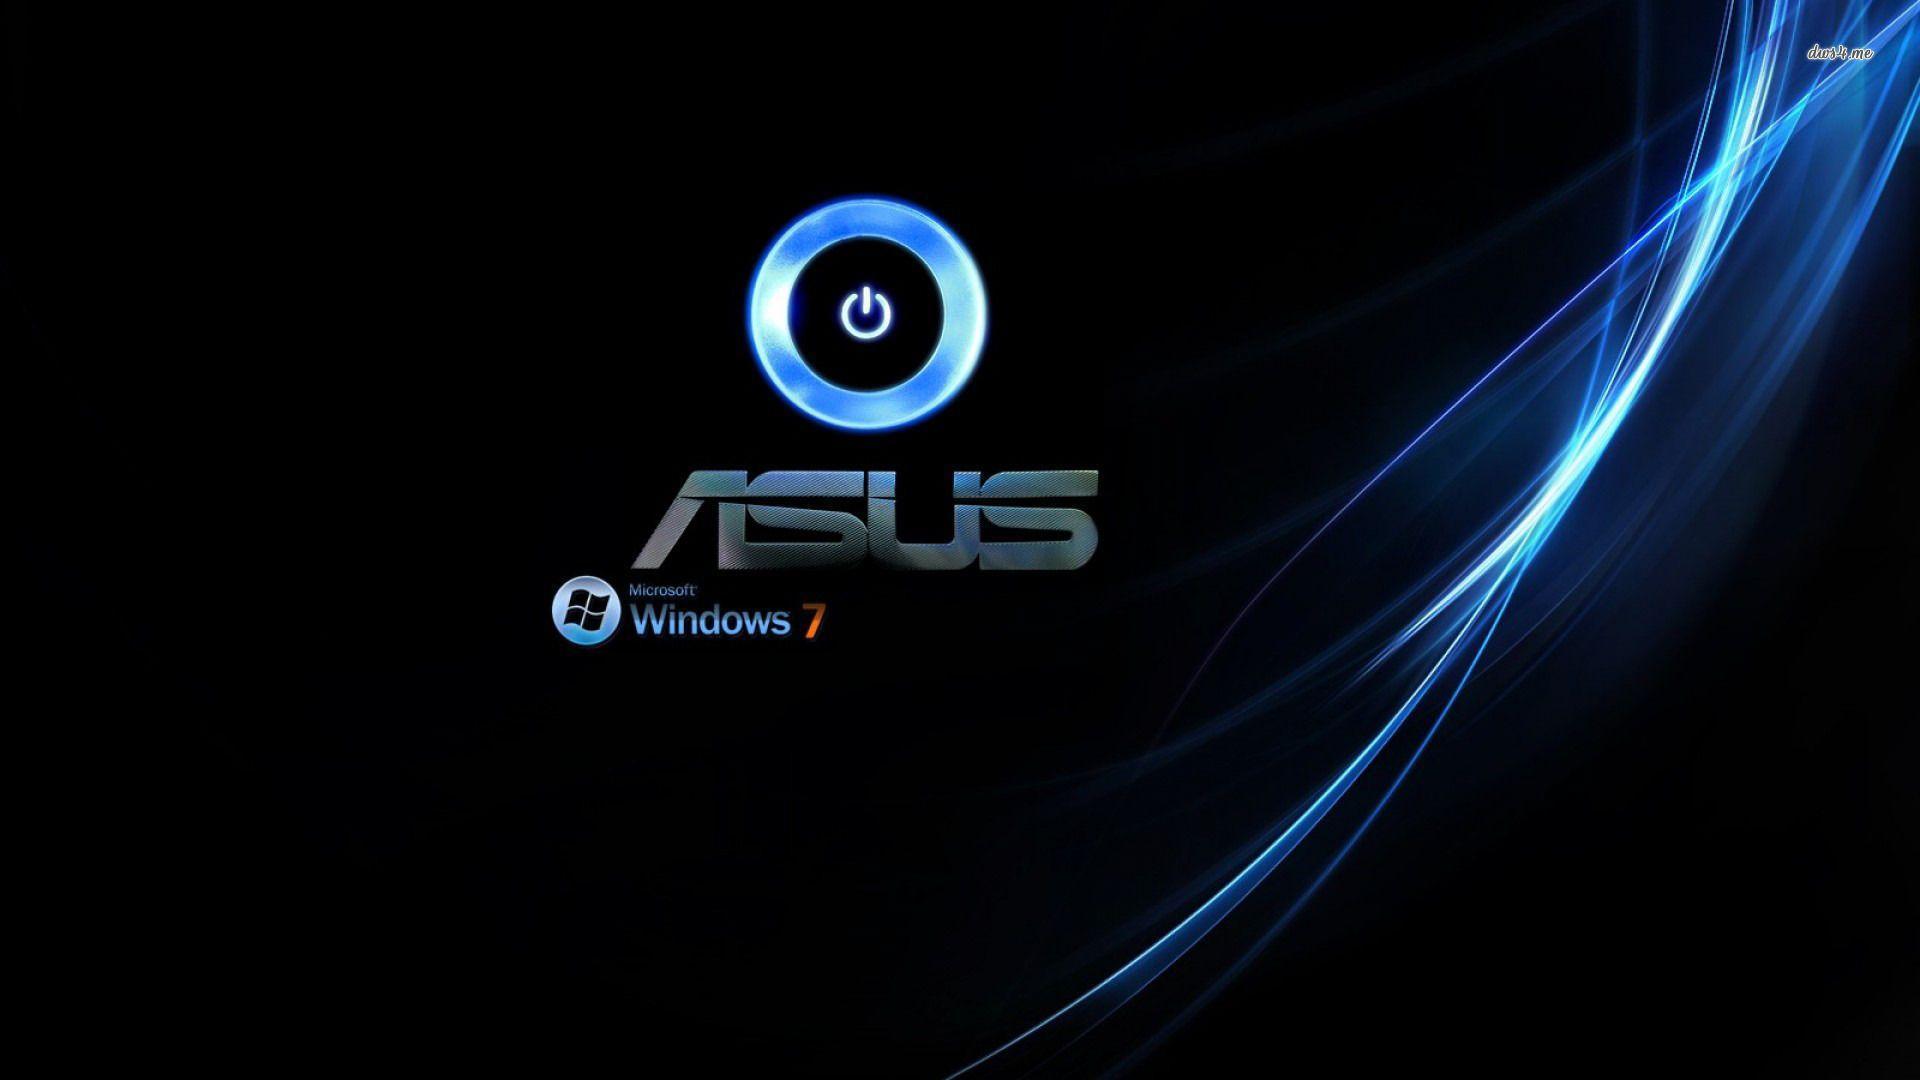 Asus Windows 7 Computer Logo a14 HD Wallpaper